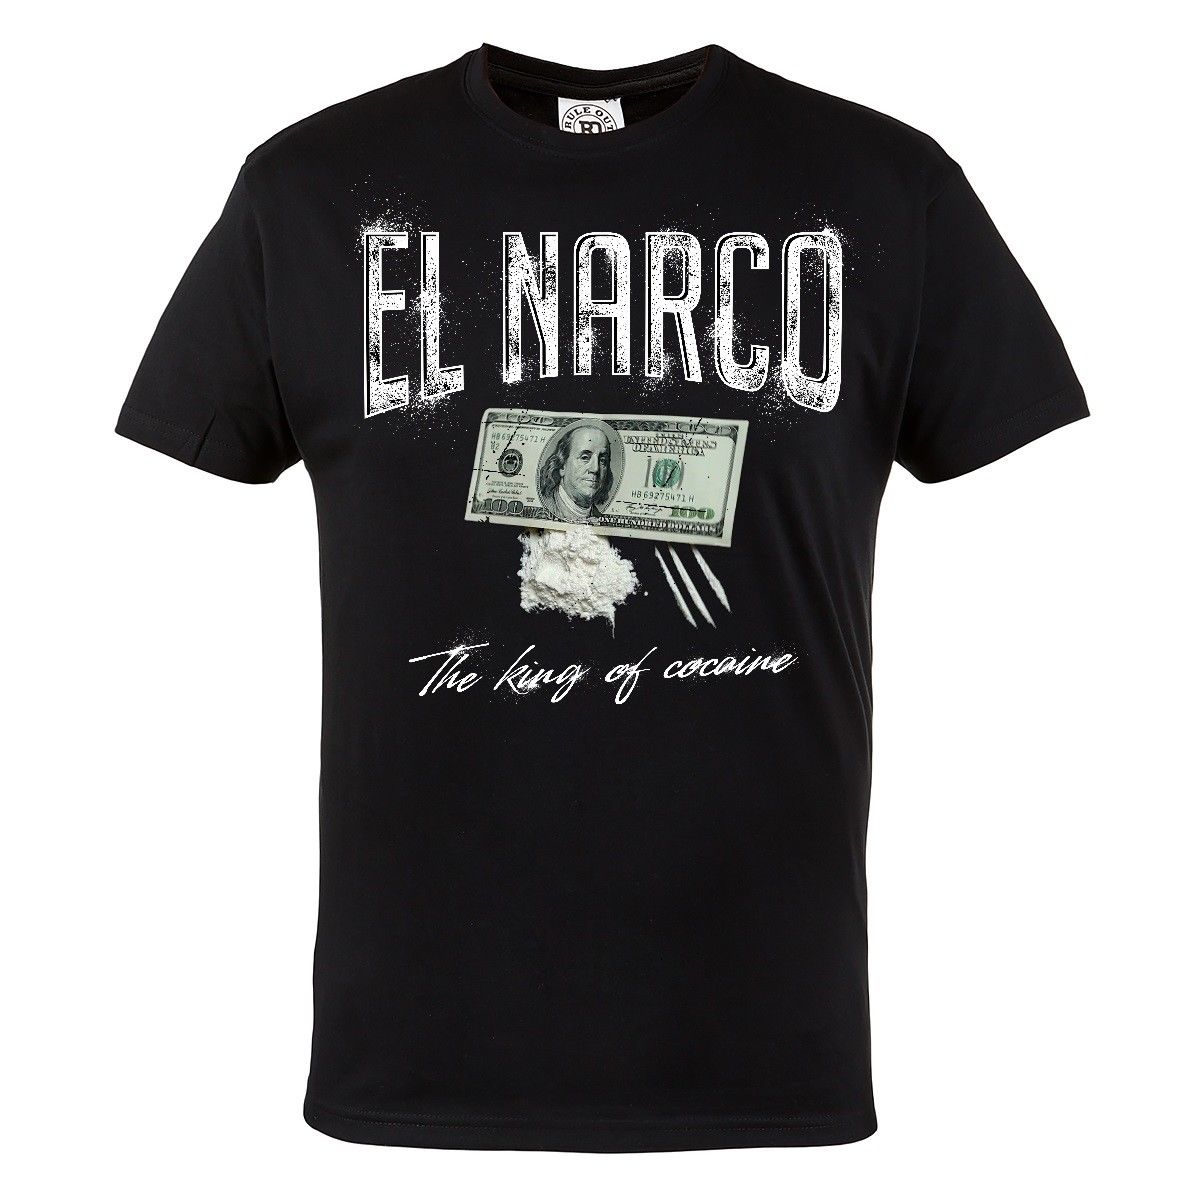 Pablo Escobar Narcos Mens Black Cotton T-shirt